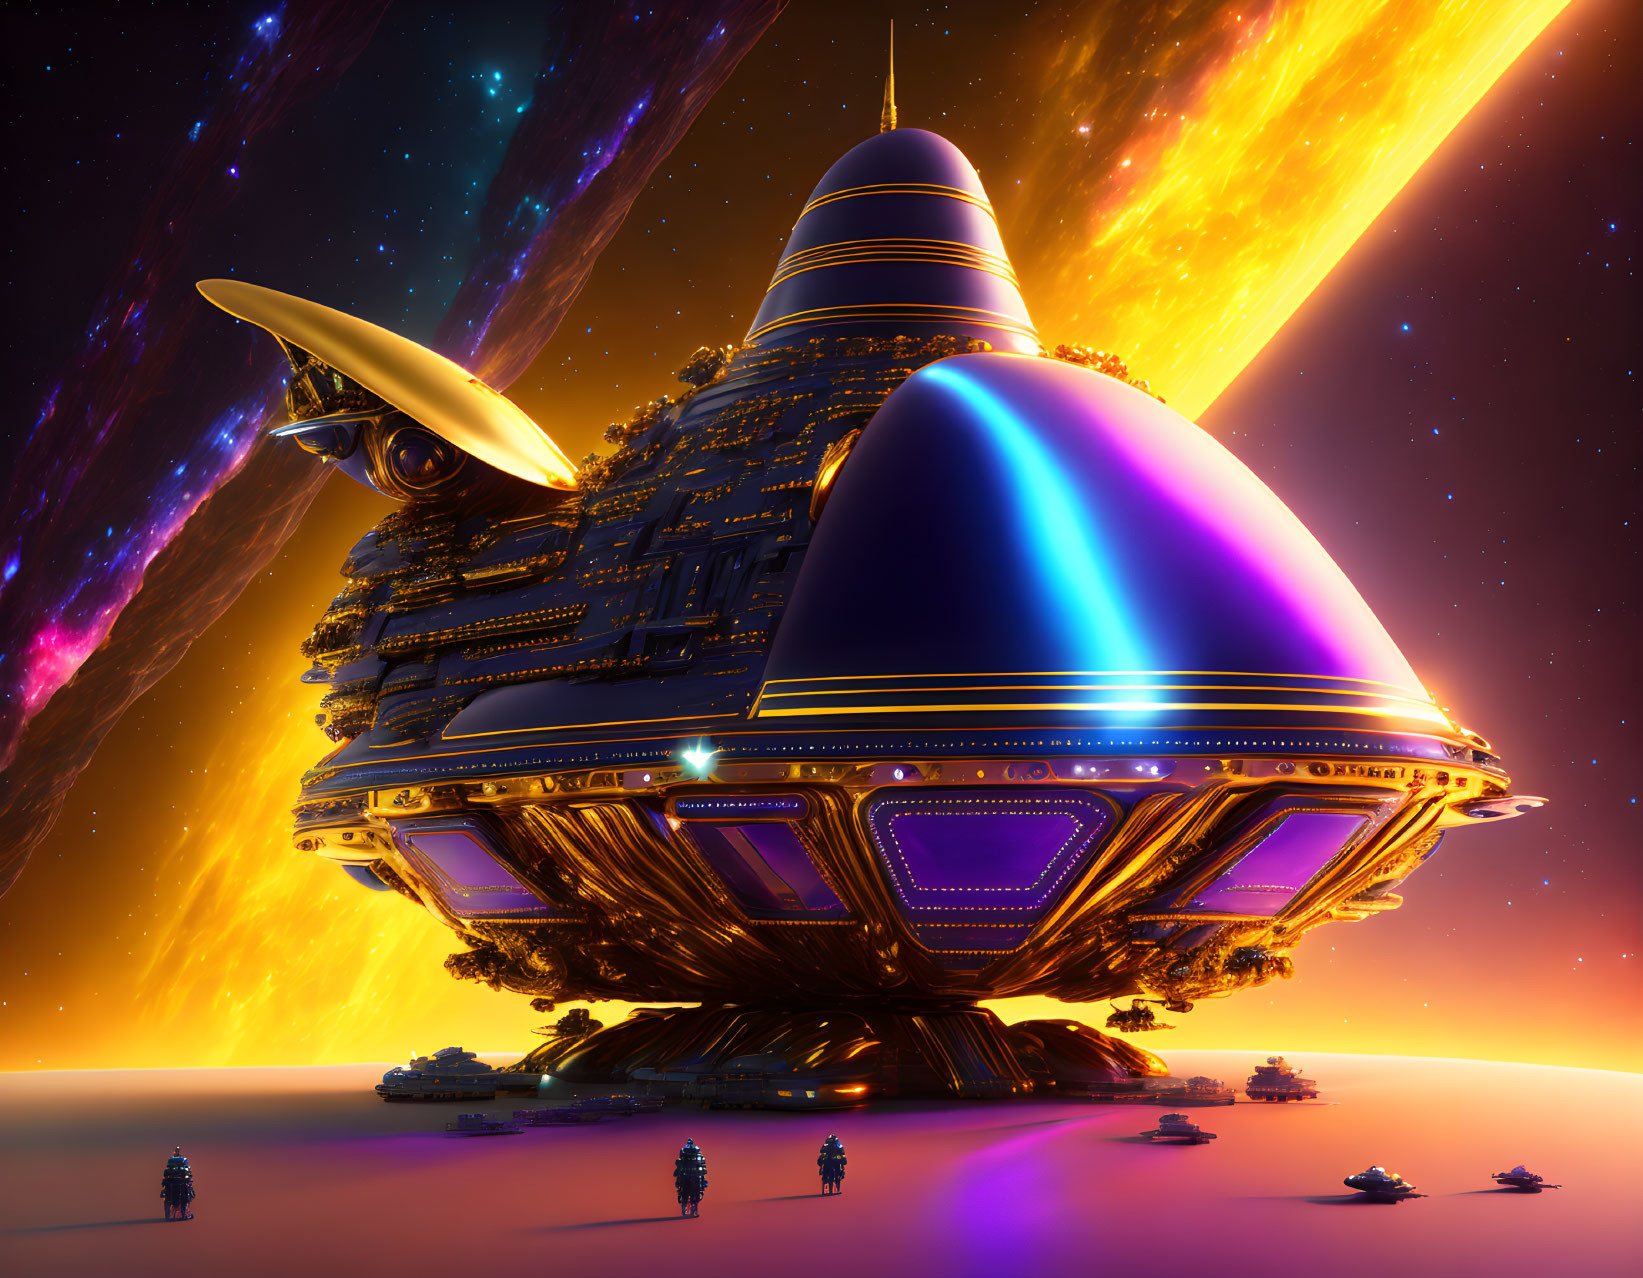 Futuristic spaceship lands on alien planet under starry sky